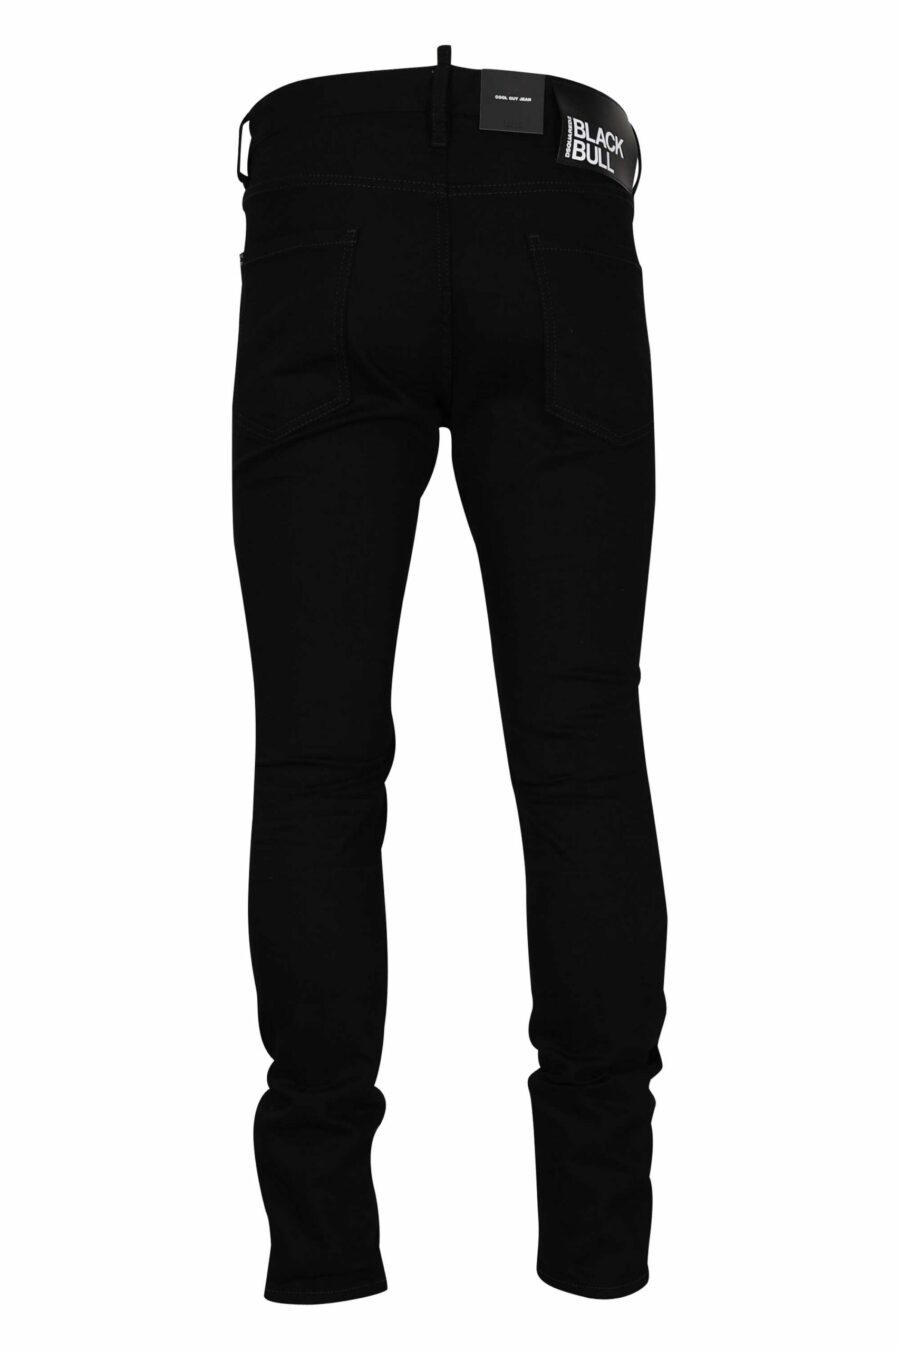 Pantalón negro "cool guy jean" - 8054148284039 2 scaled